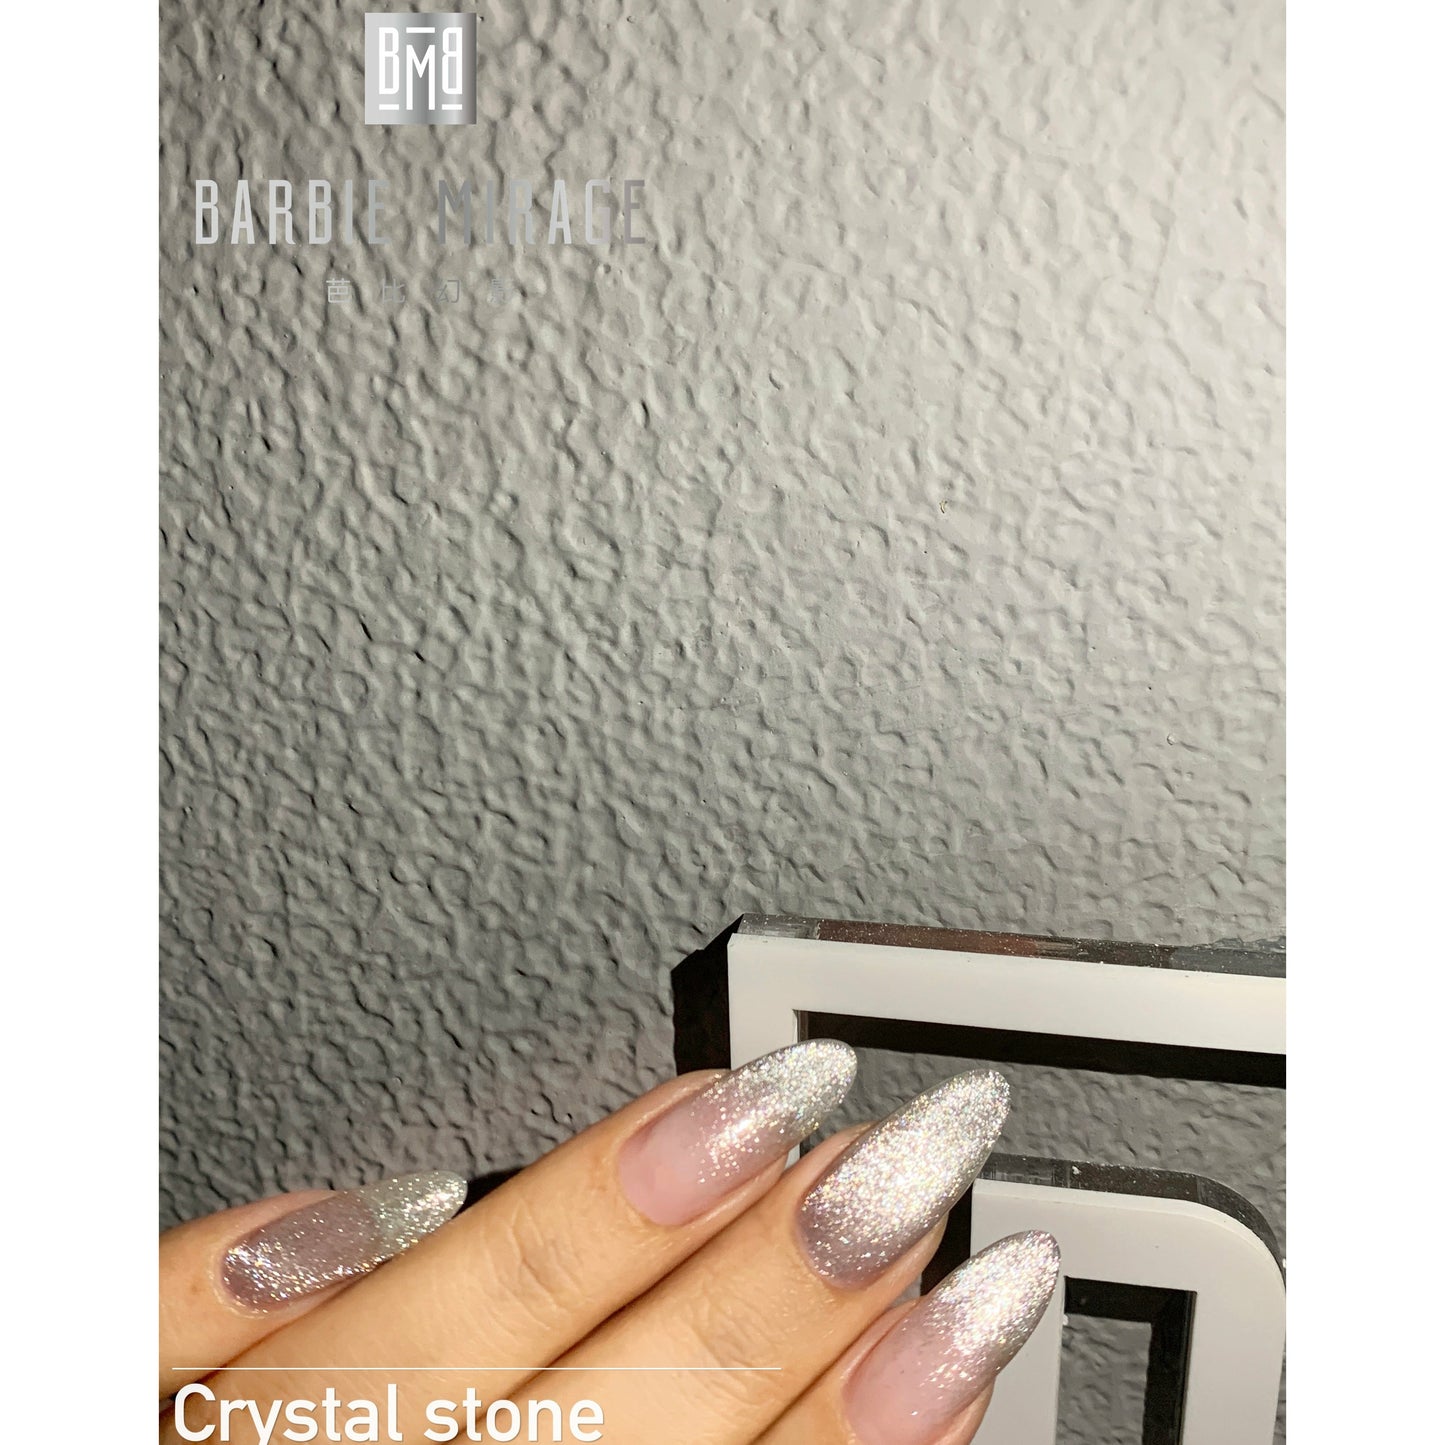 Dark Gray Silver Cateye Magnetic Gel Crystal Stone